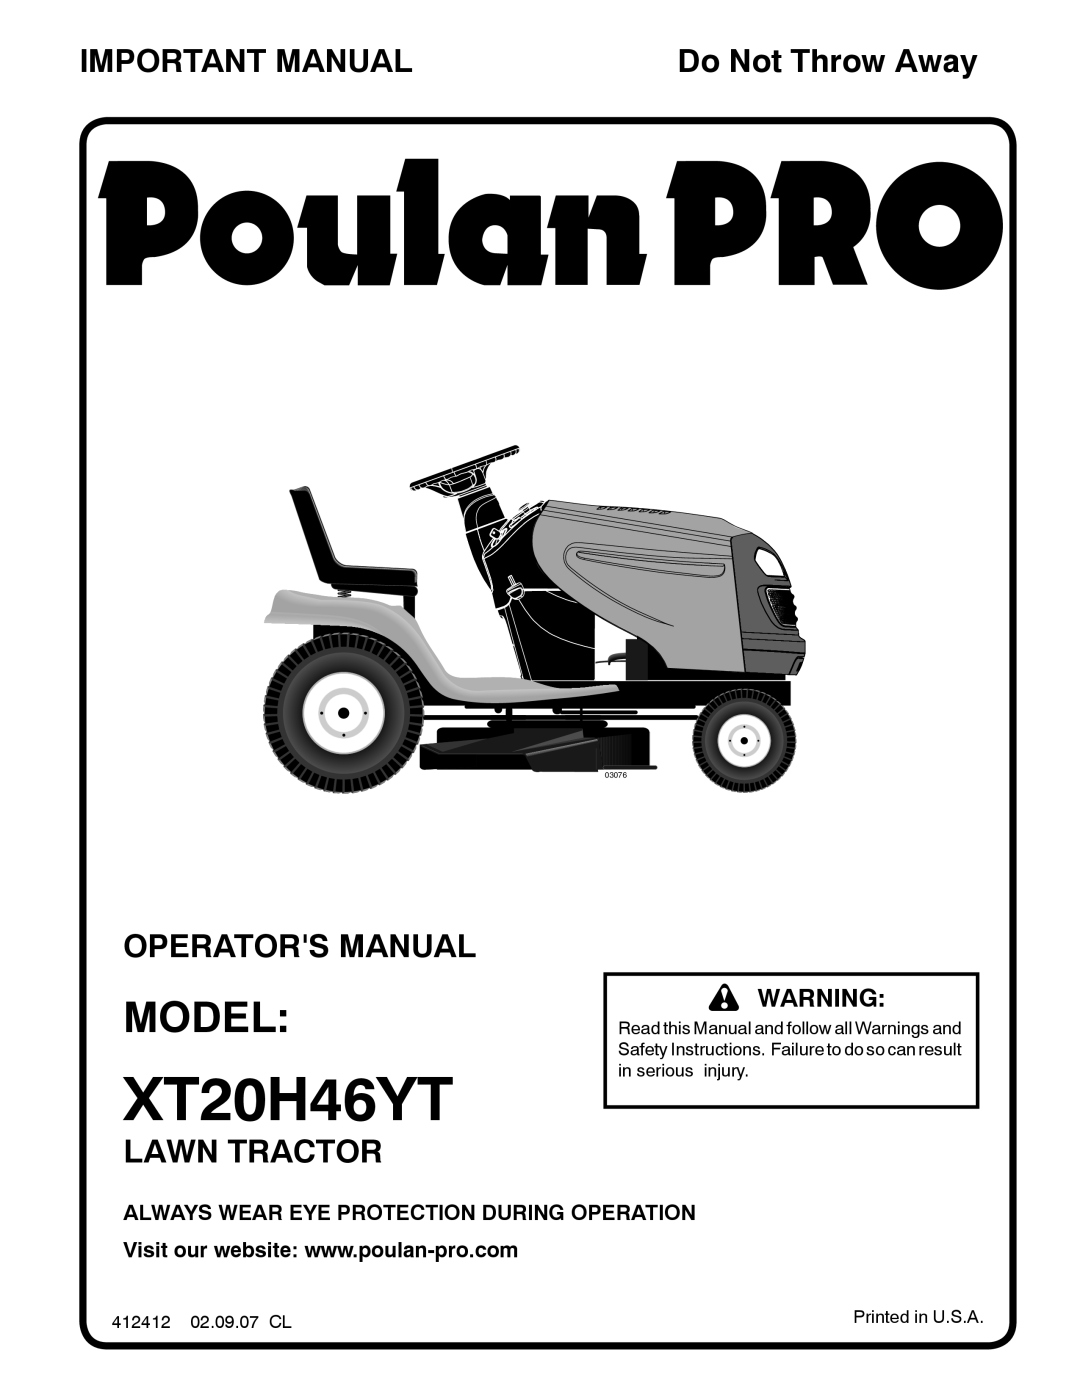 Poulan 412412 manual Model, Important Manual, Operators Manual, Lawn Tractor, Do Not Throw Away, XT20H46YT, 03076 